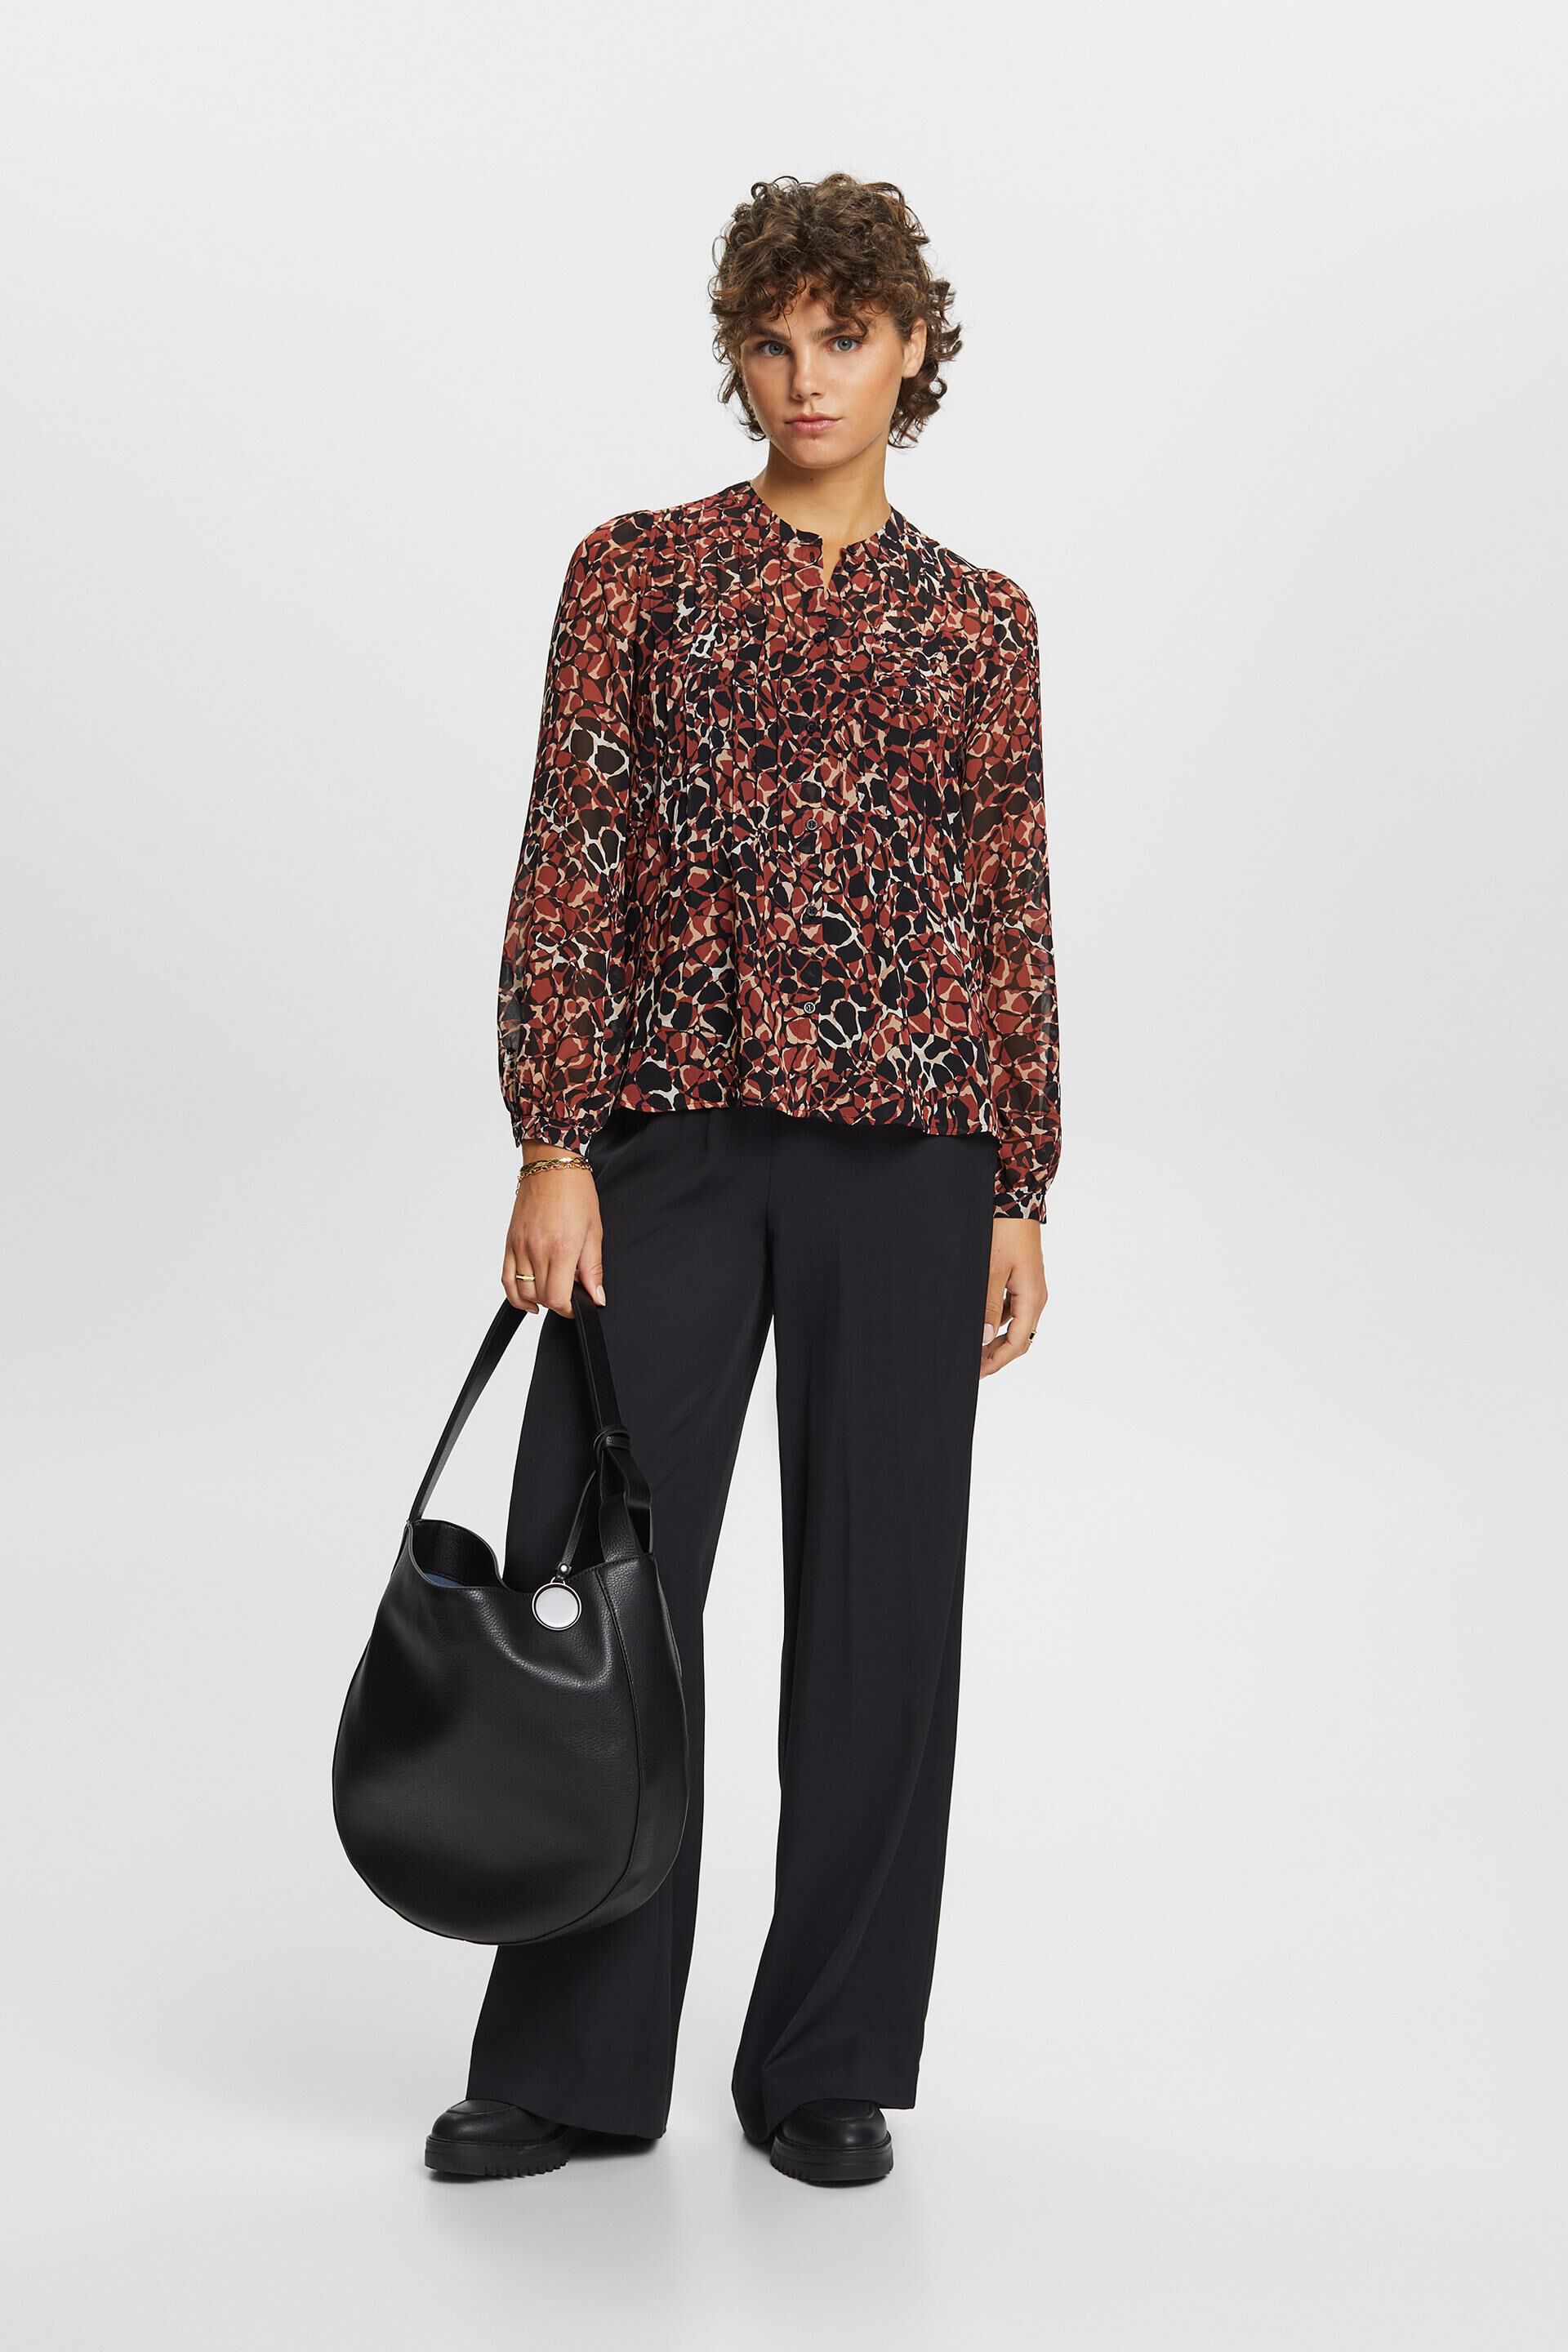 Recycled: patterned chiffon blouse